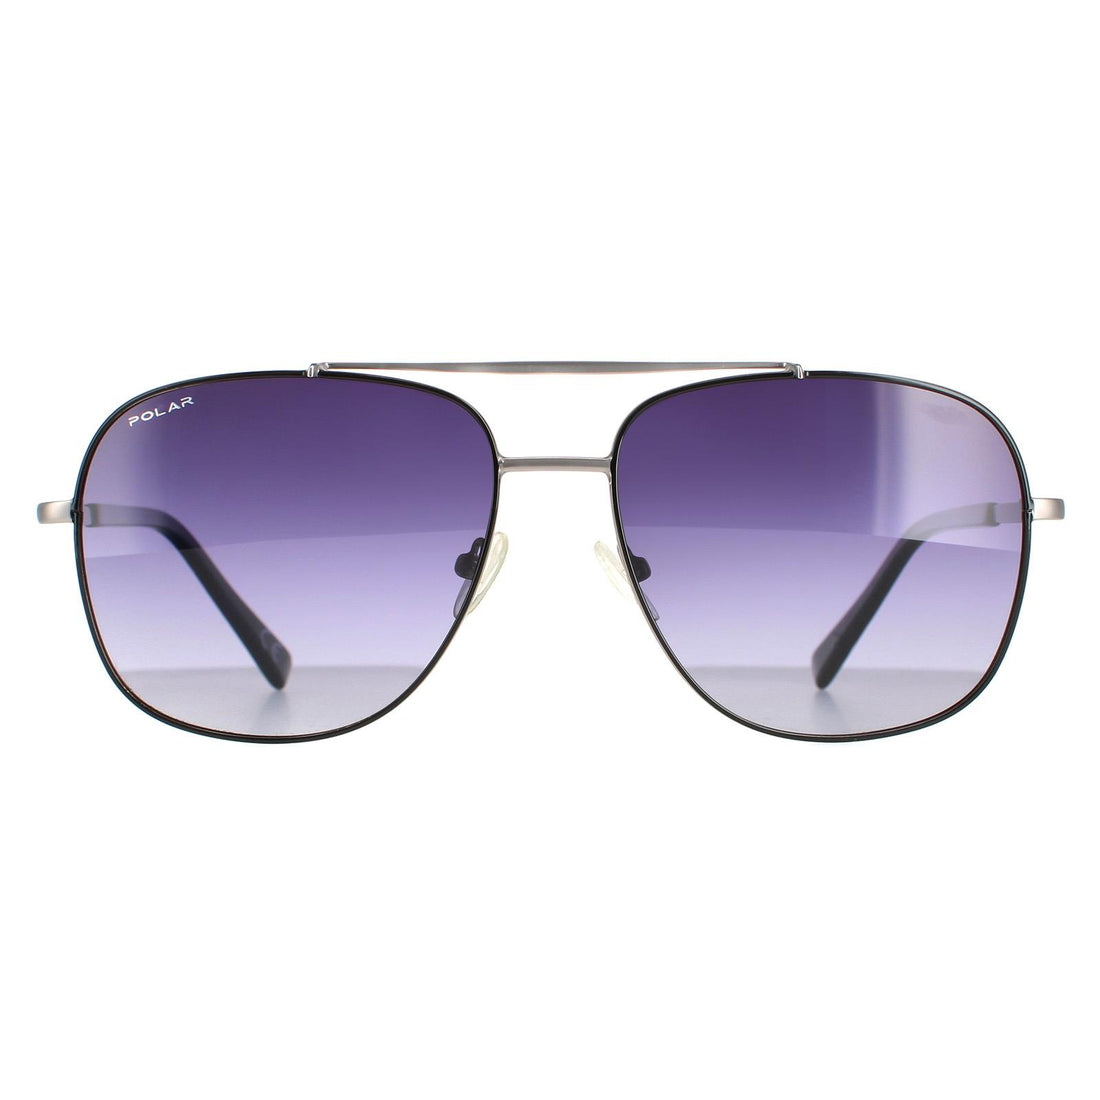 Polar Sunglasses Niles COL.48/F Dark Grey Grey Gradient Polarized